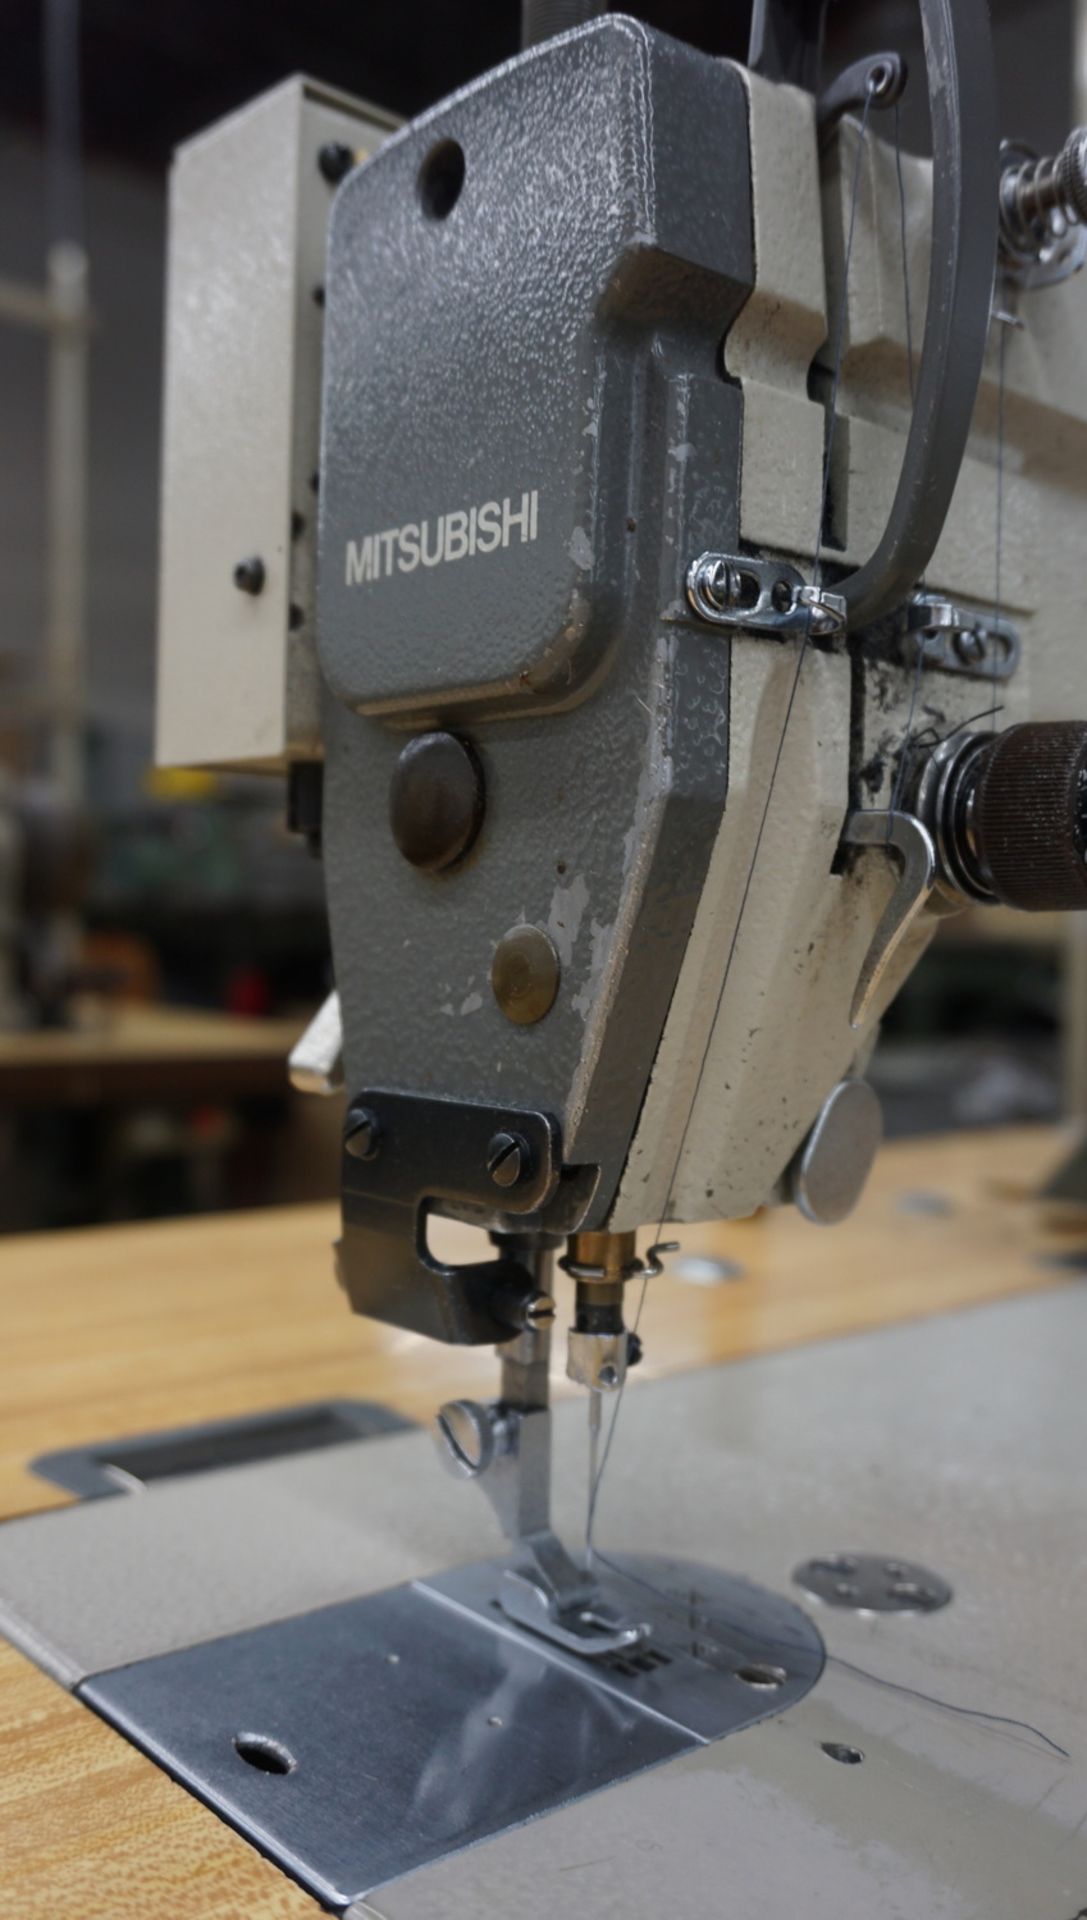 MITSUBISHI LS2-1180 SINGLE NEEDLE SEWING MACHINE, S/N 274625 (110V) - Image 2 of 4